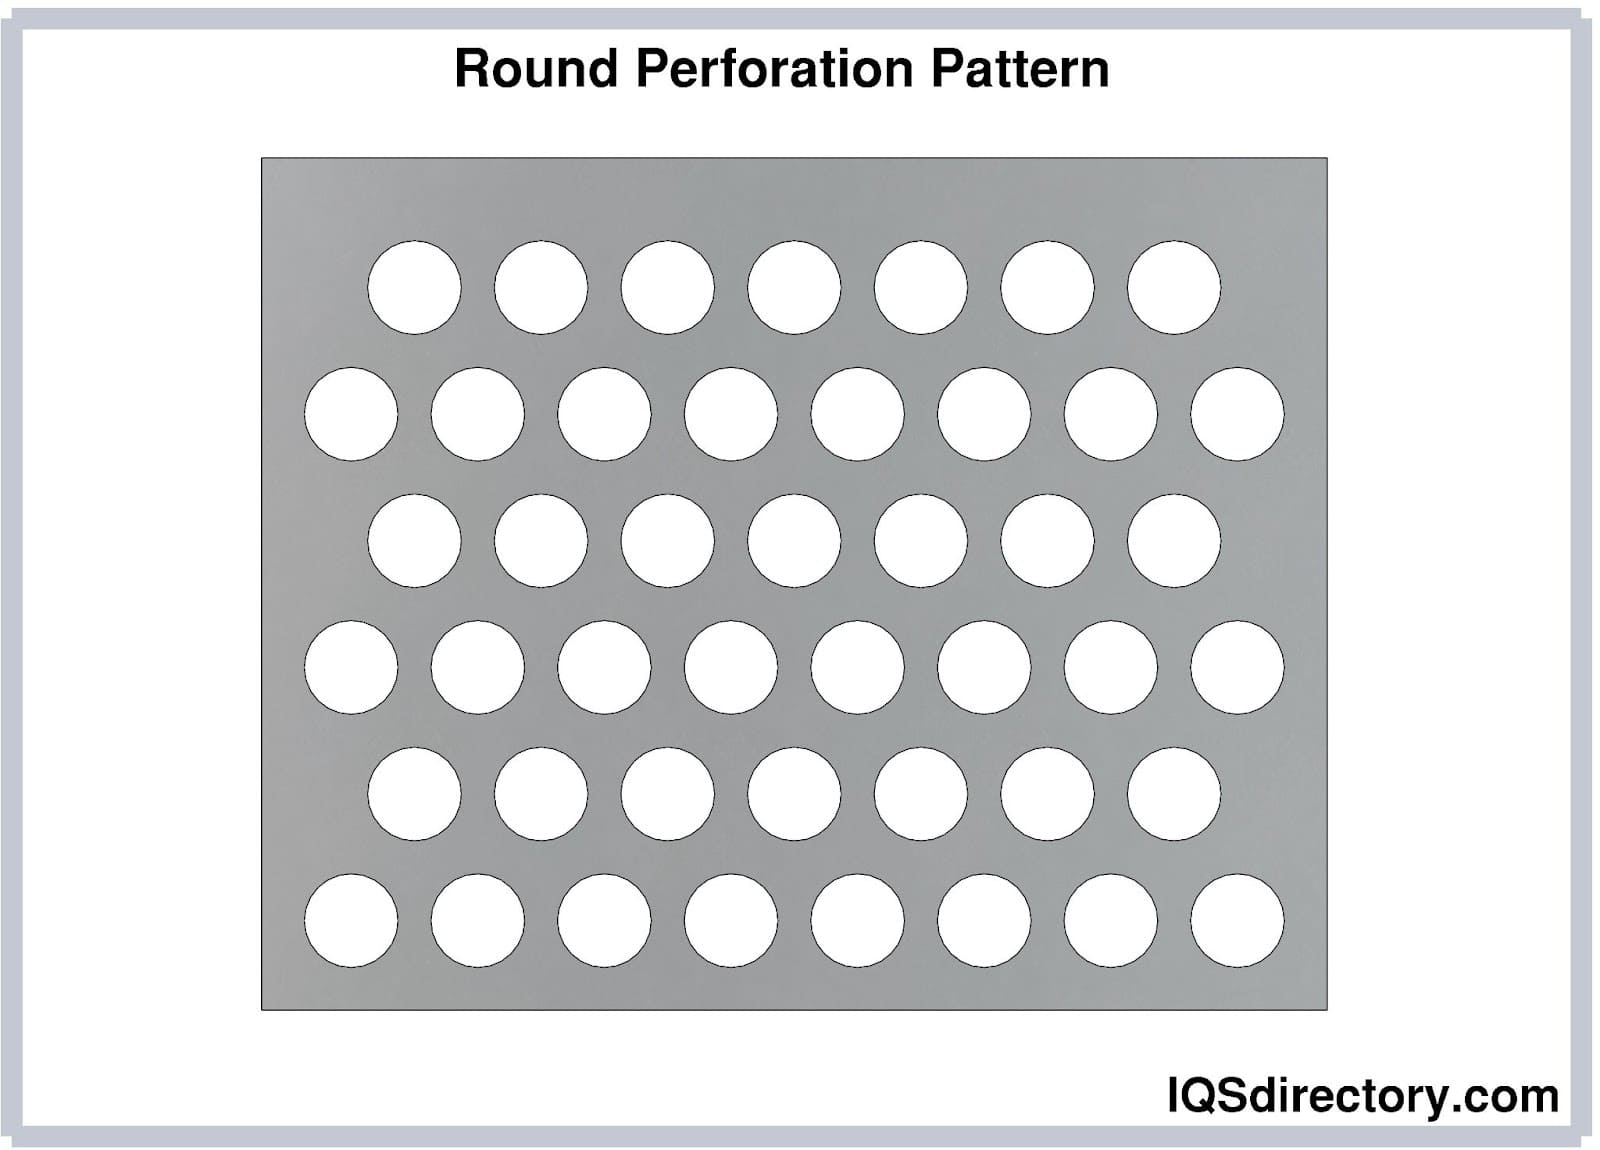 Round Perforation Pattern